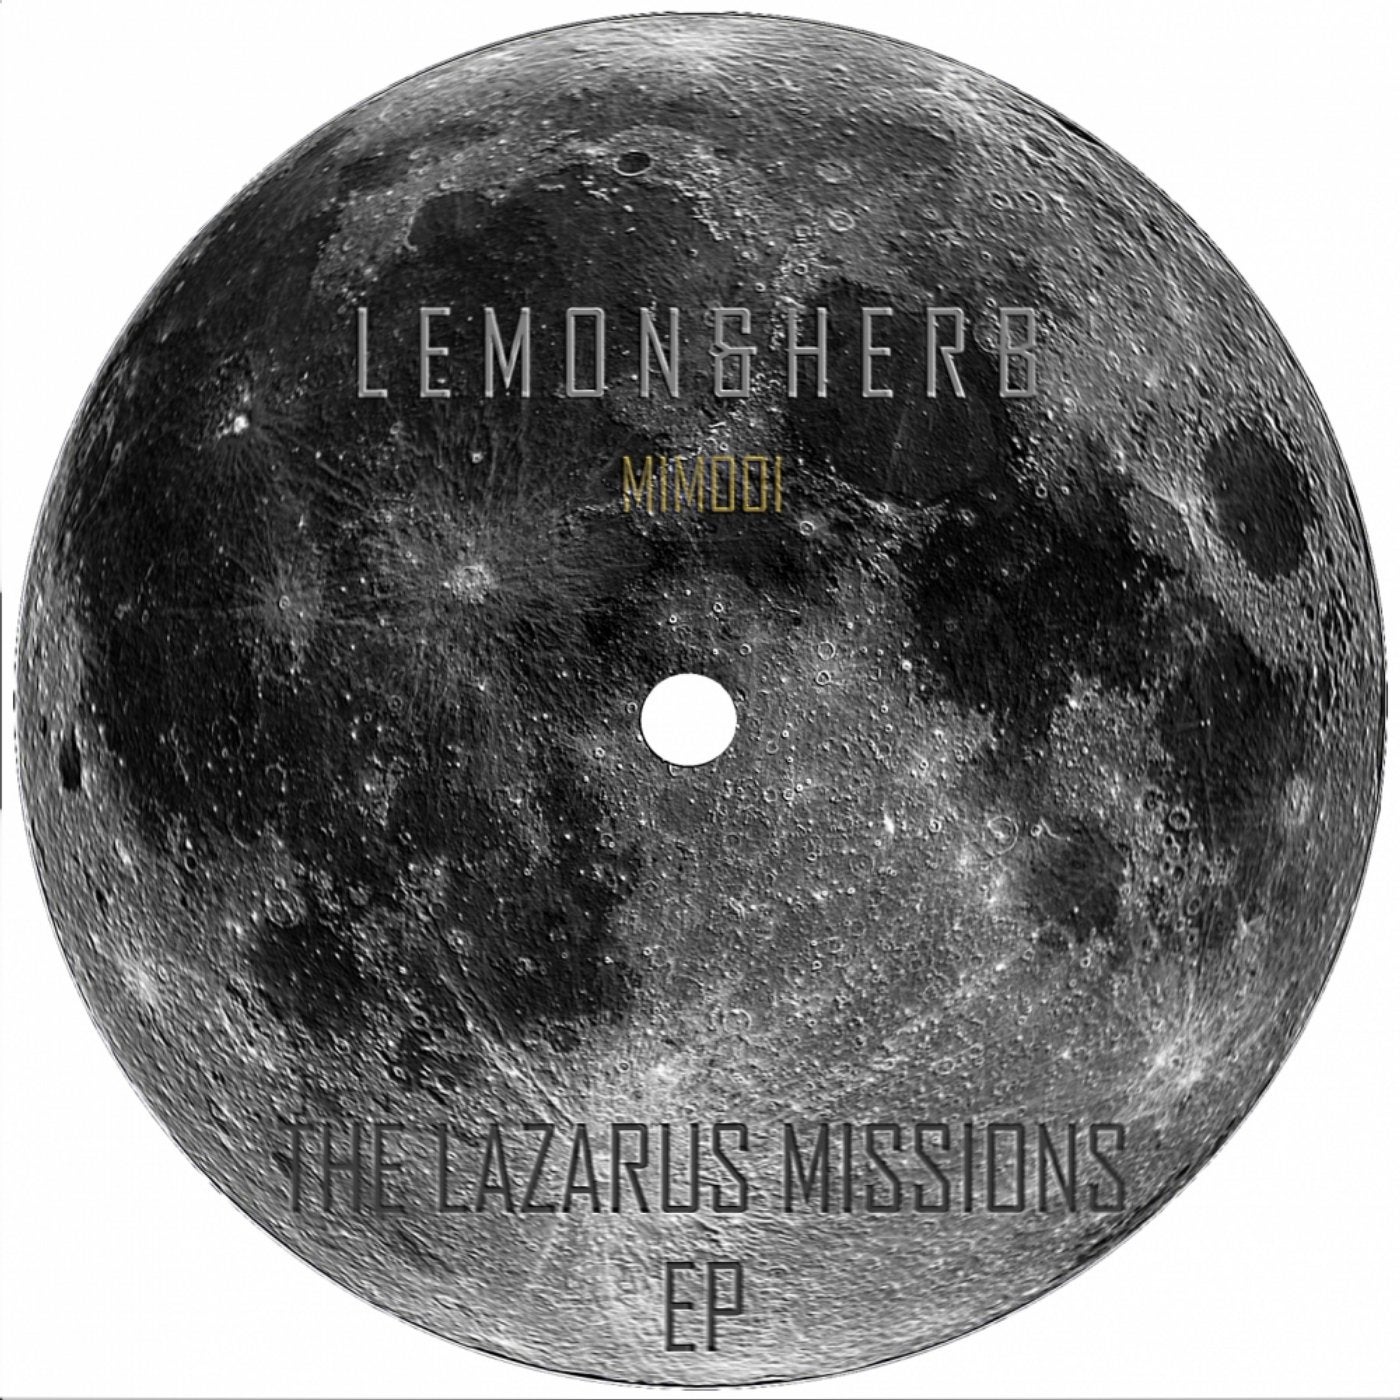 The Lazarus Missions